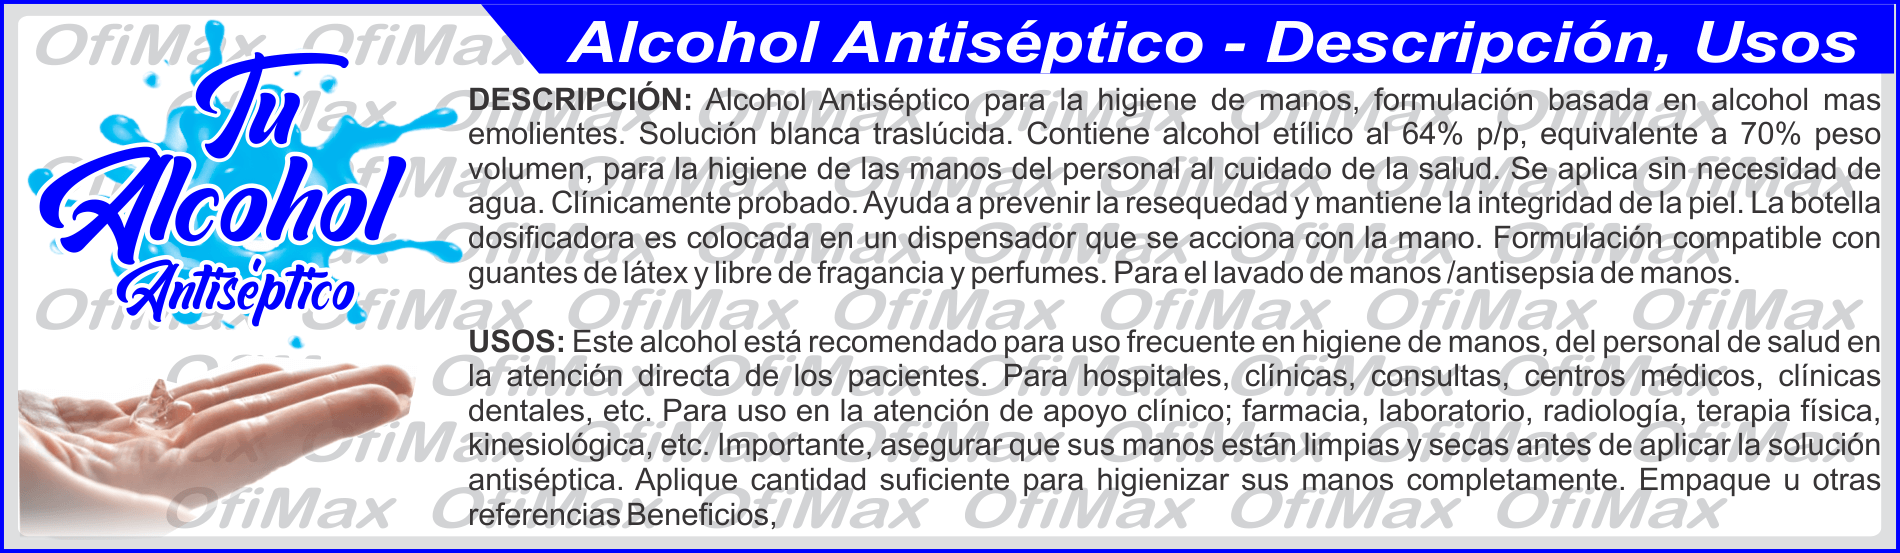 alcohol antiseptico usos, bogota, colombia